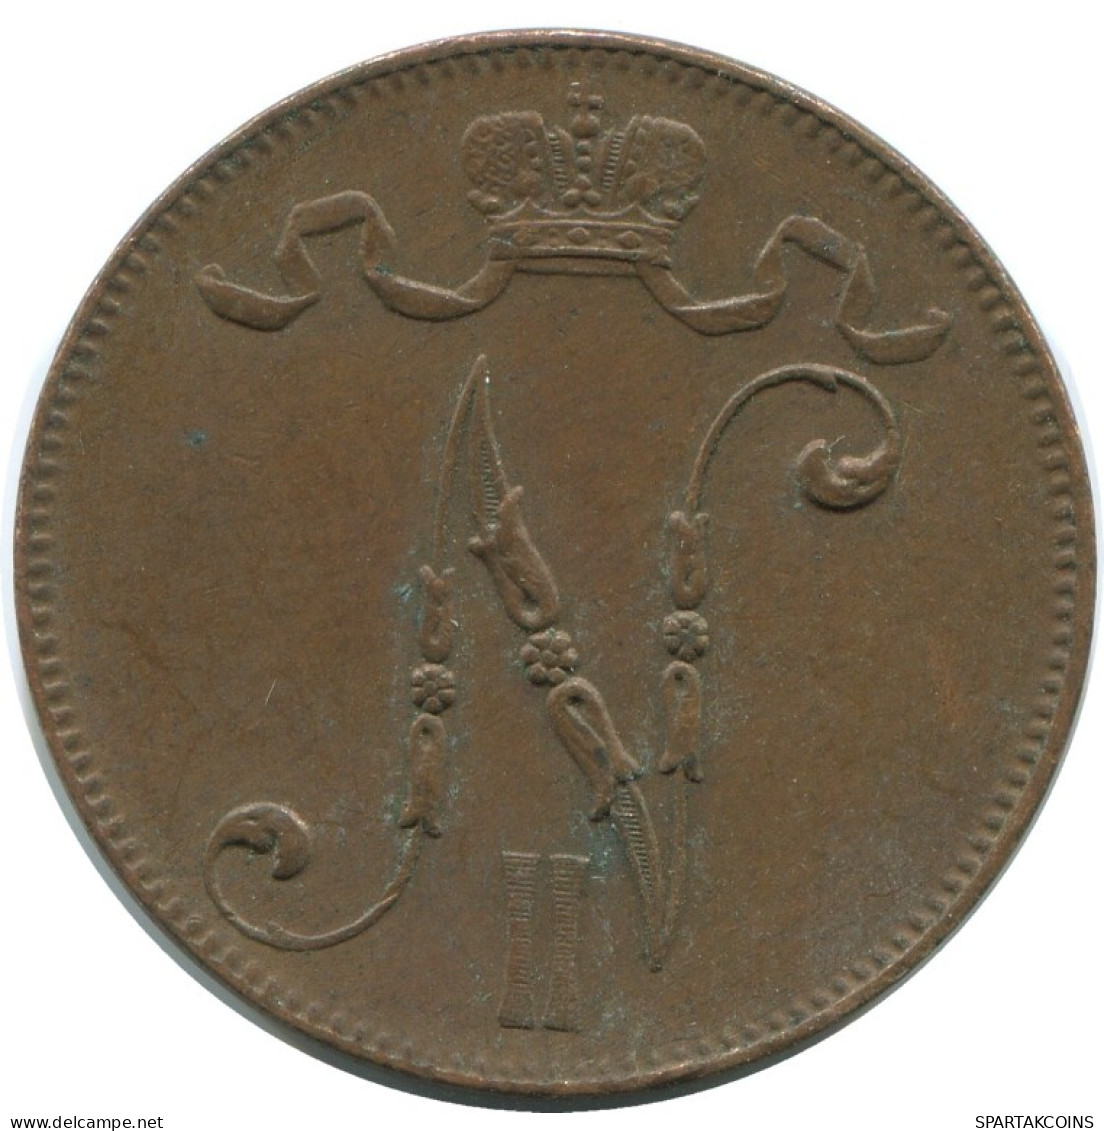 5 PENNIA 1916 FINLAND Coin RUSSIA EMPIRE #AB149.5.U.A - Finnland